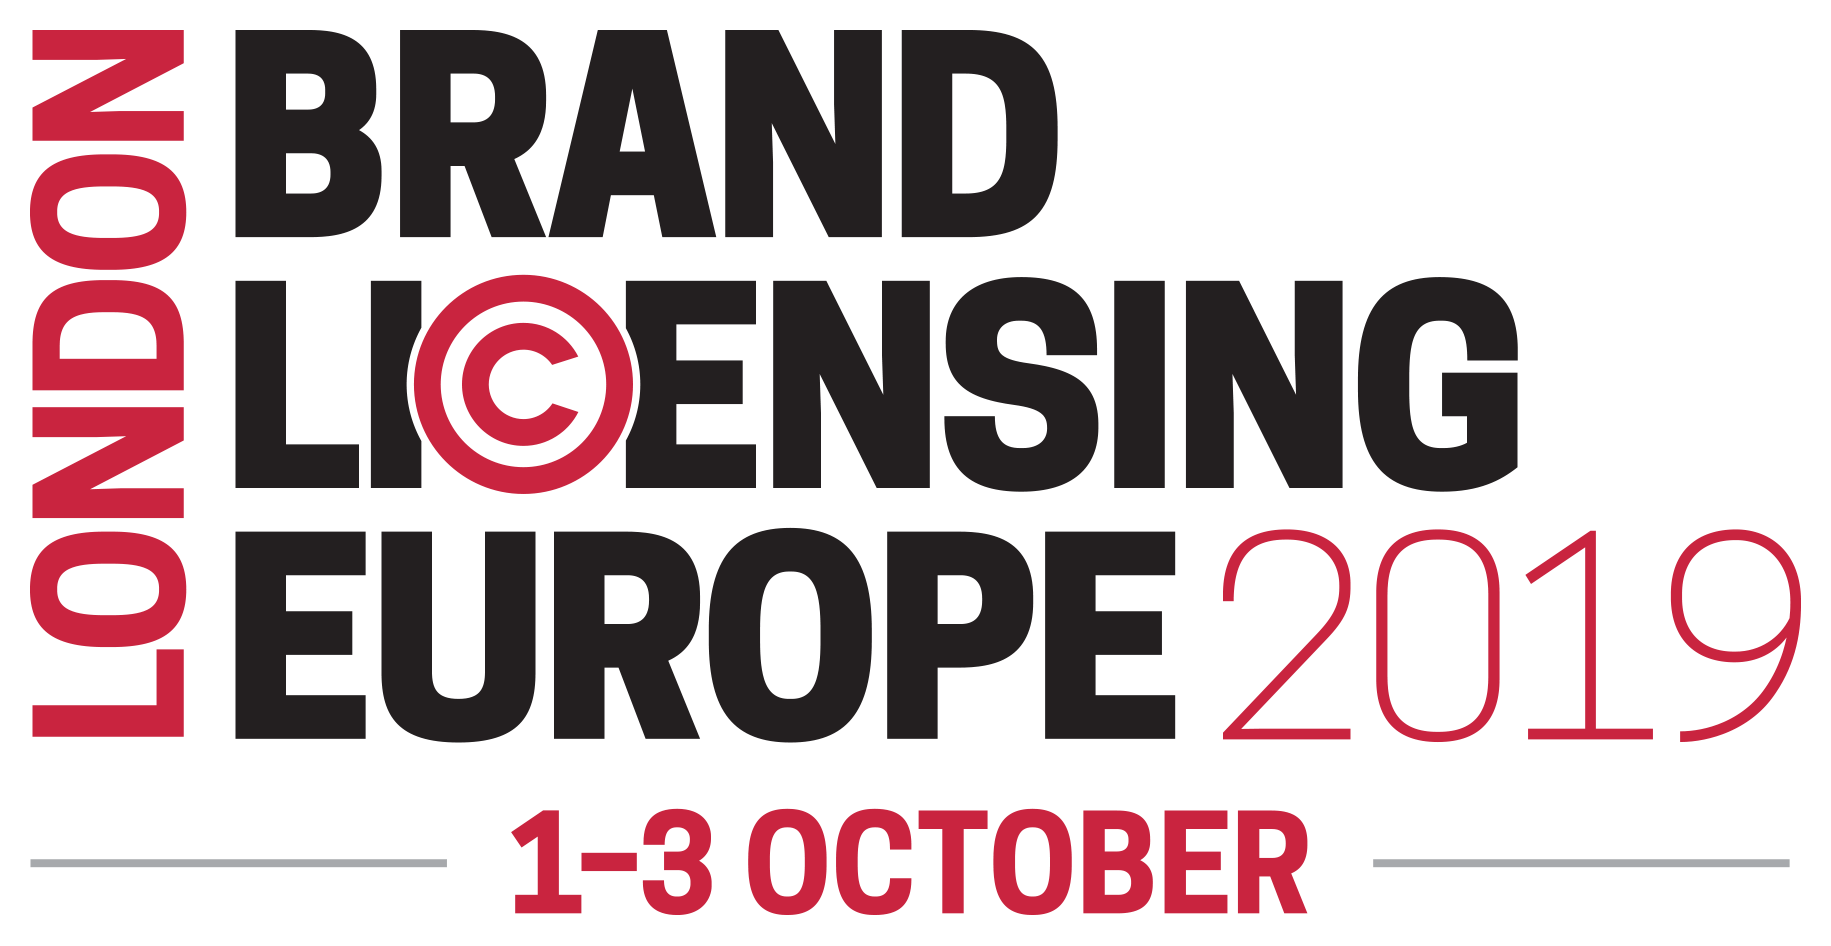 Europe Logo - Europe's Leading Brand Licensing Event | Brand Licensing Europe